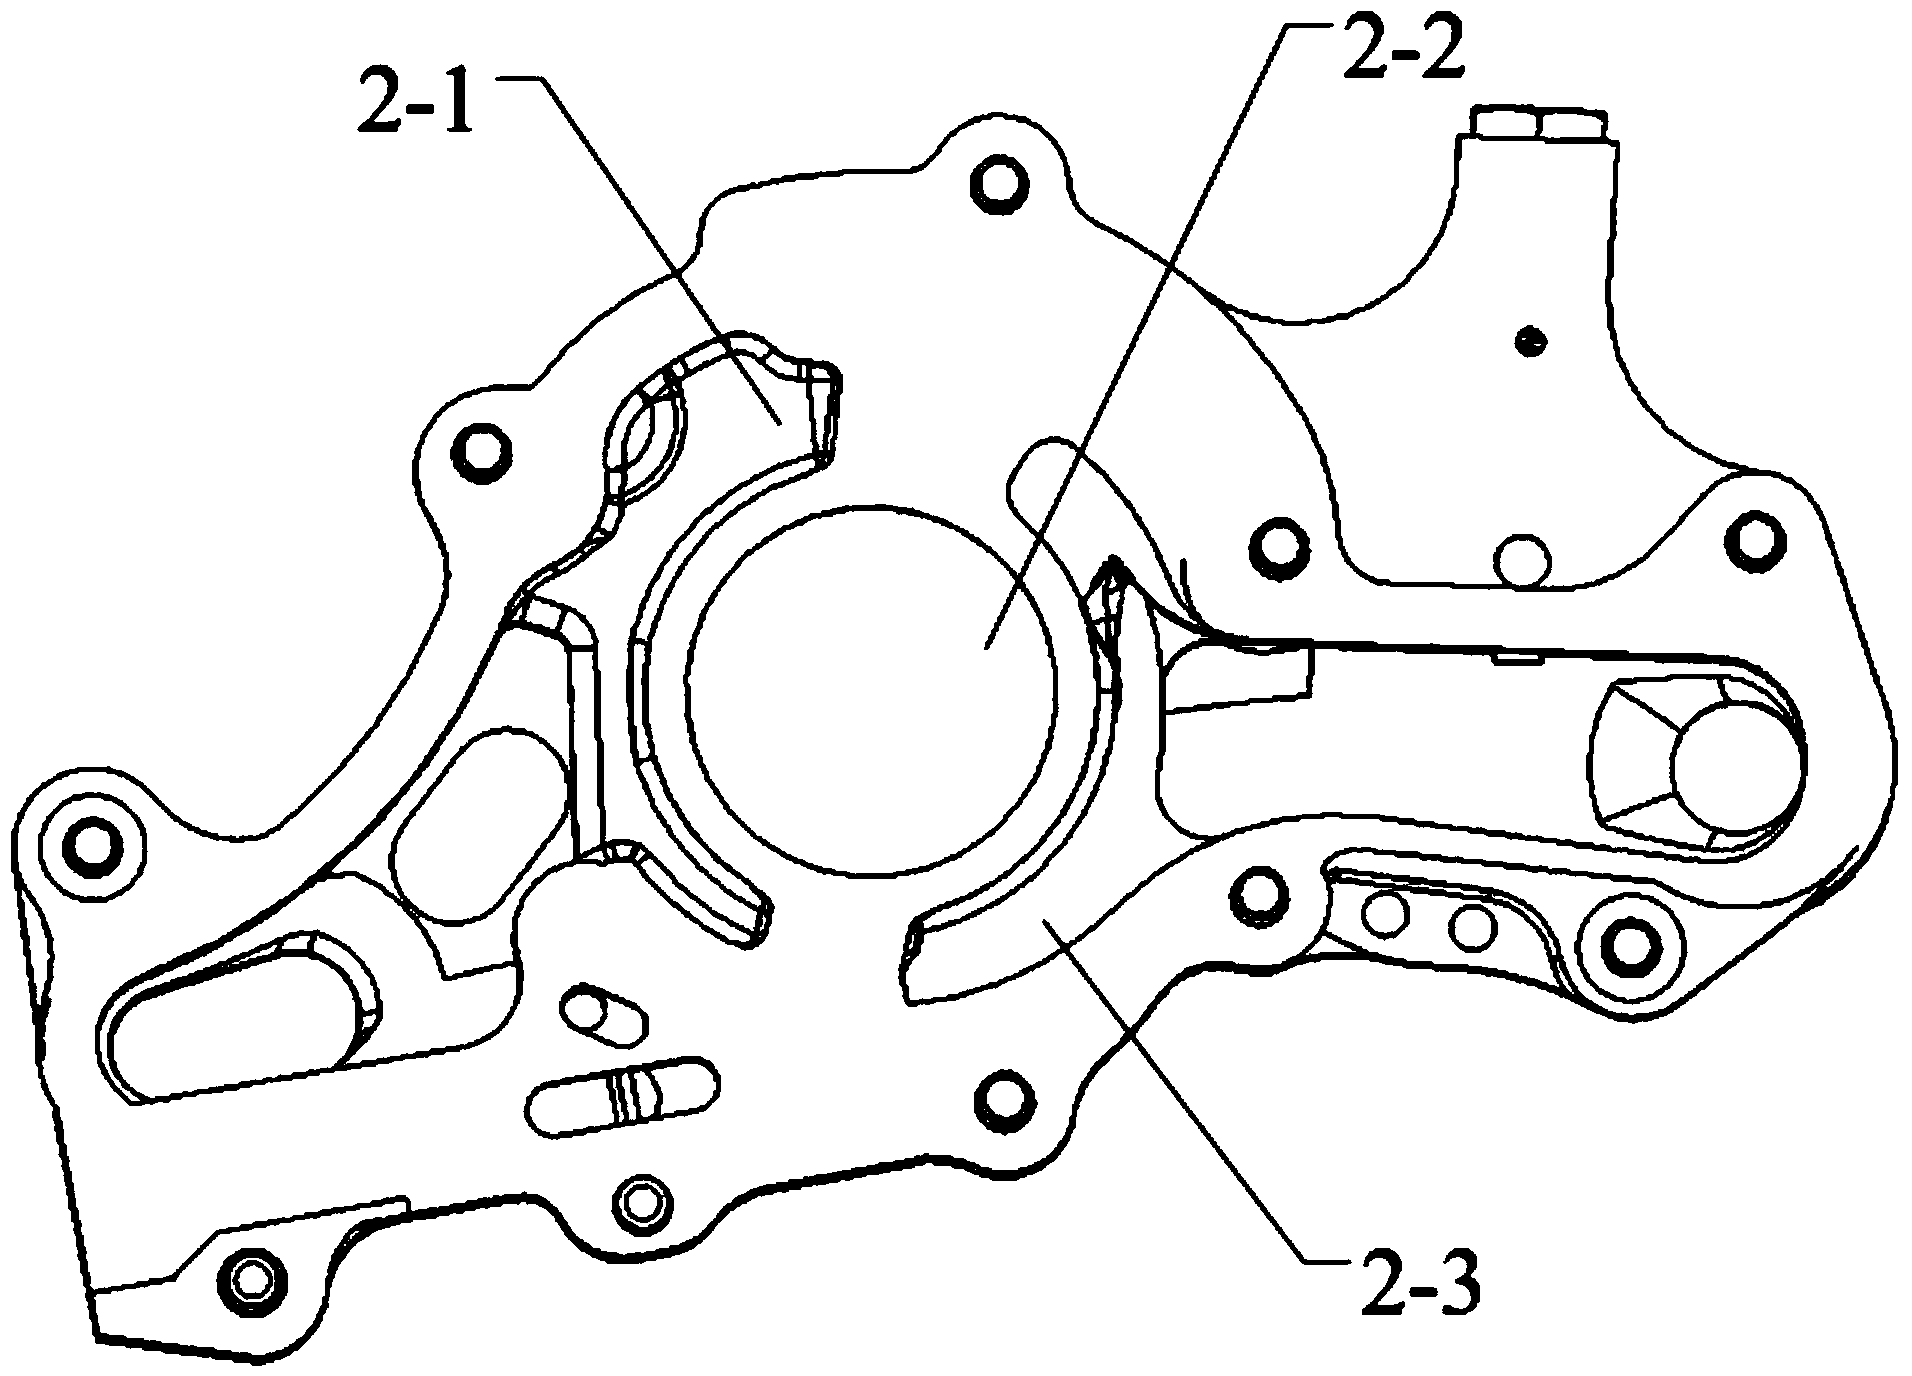 Rotor-type variable pump